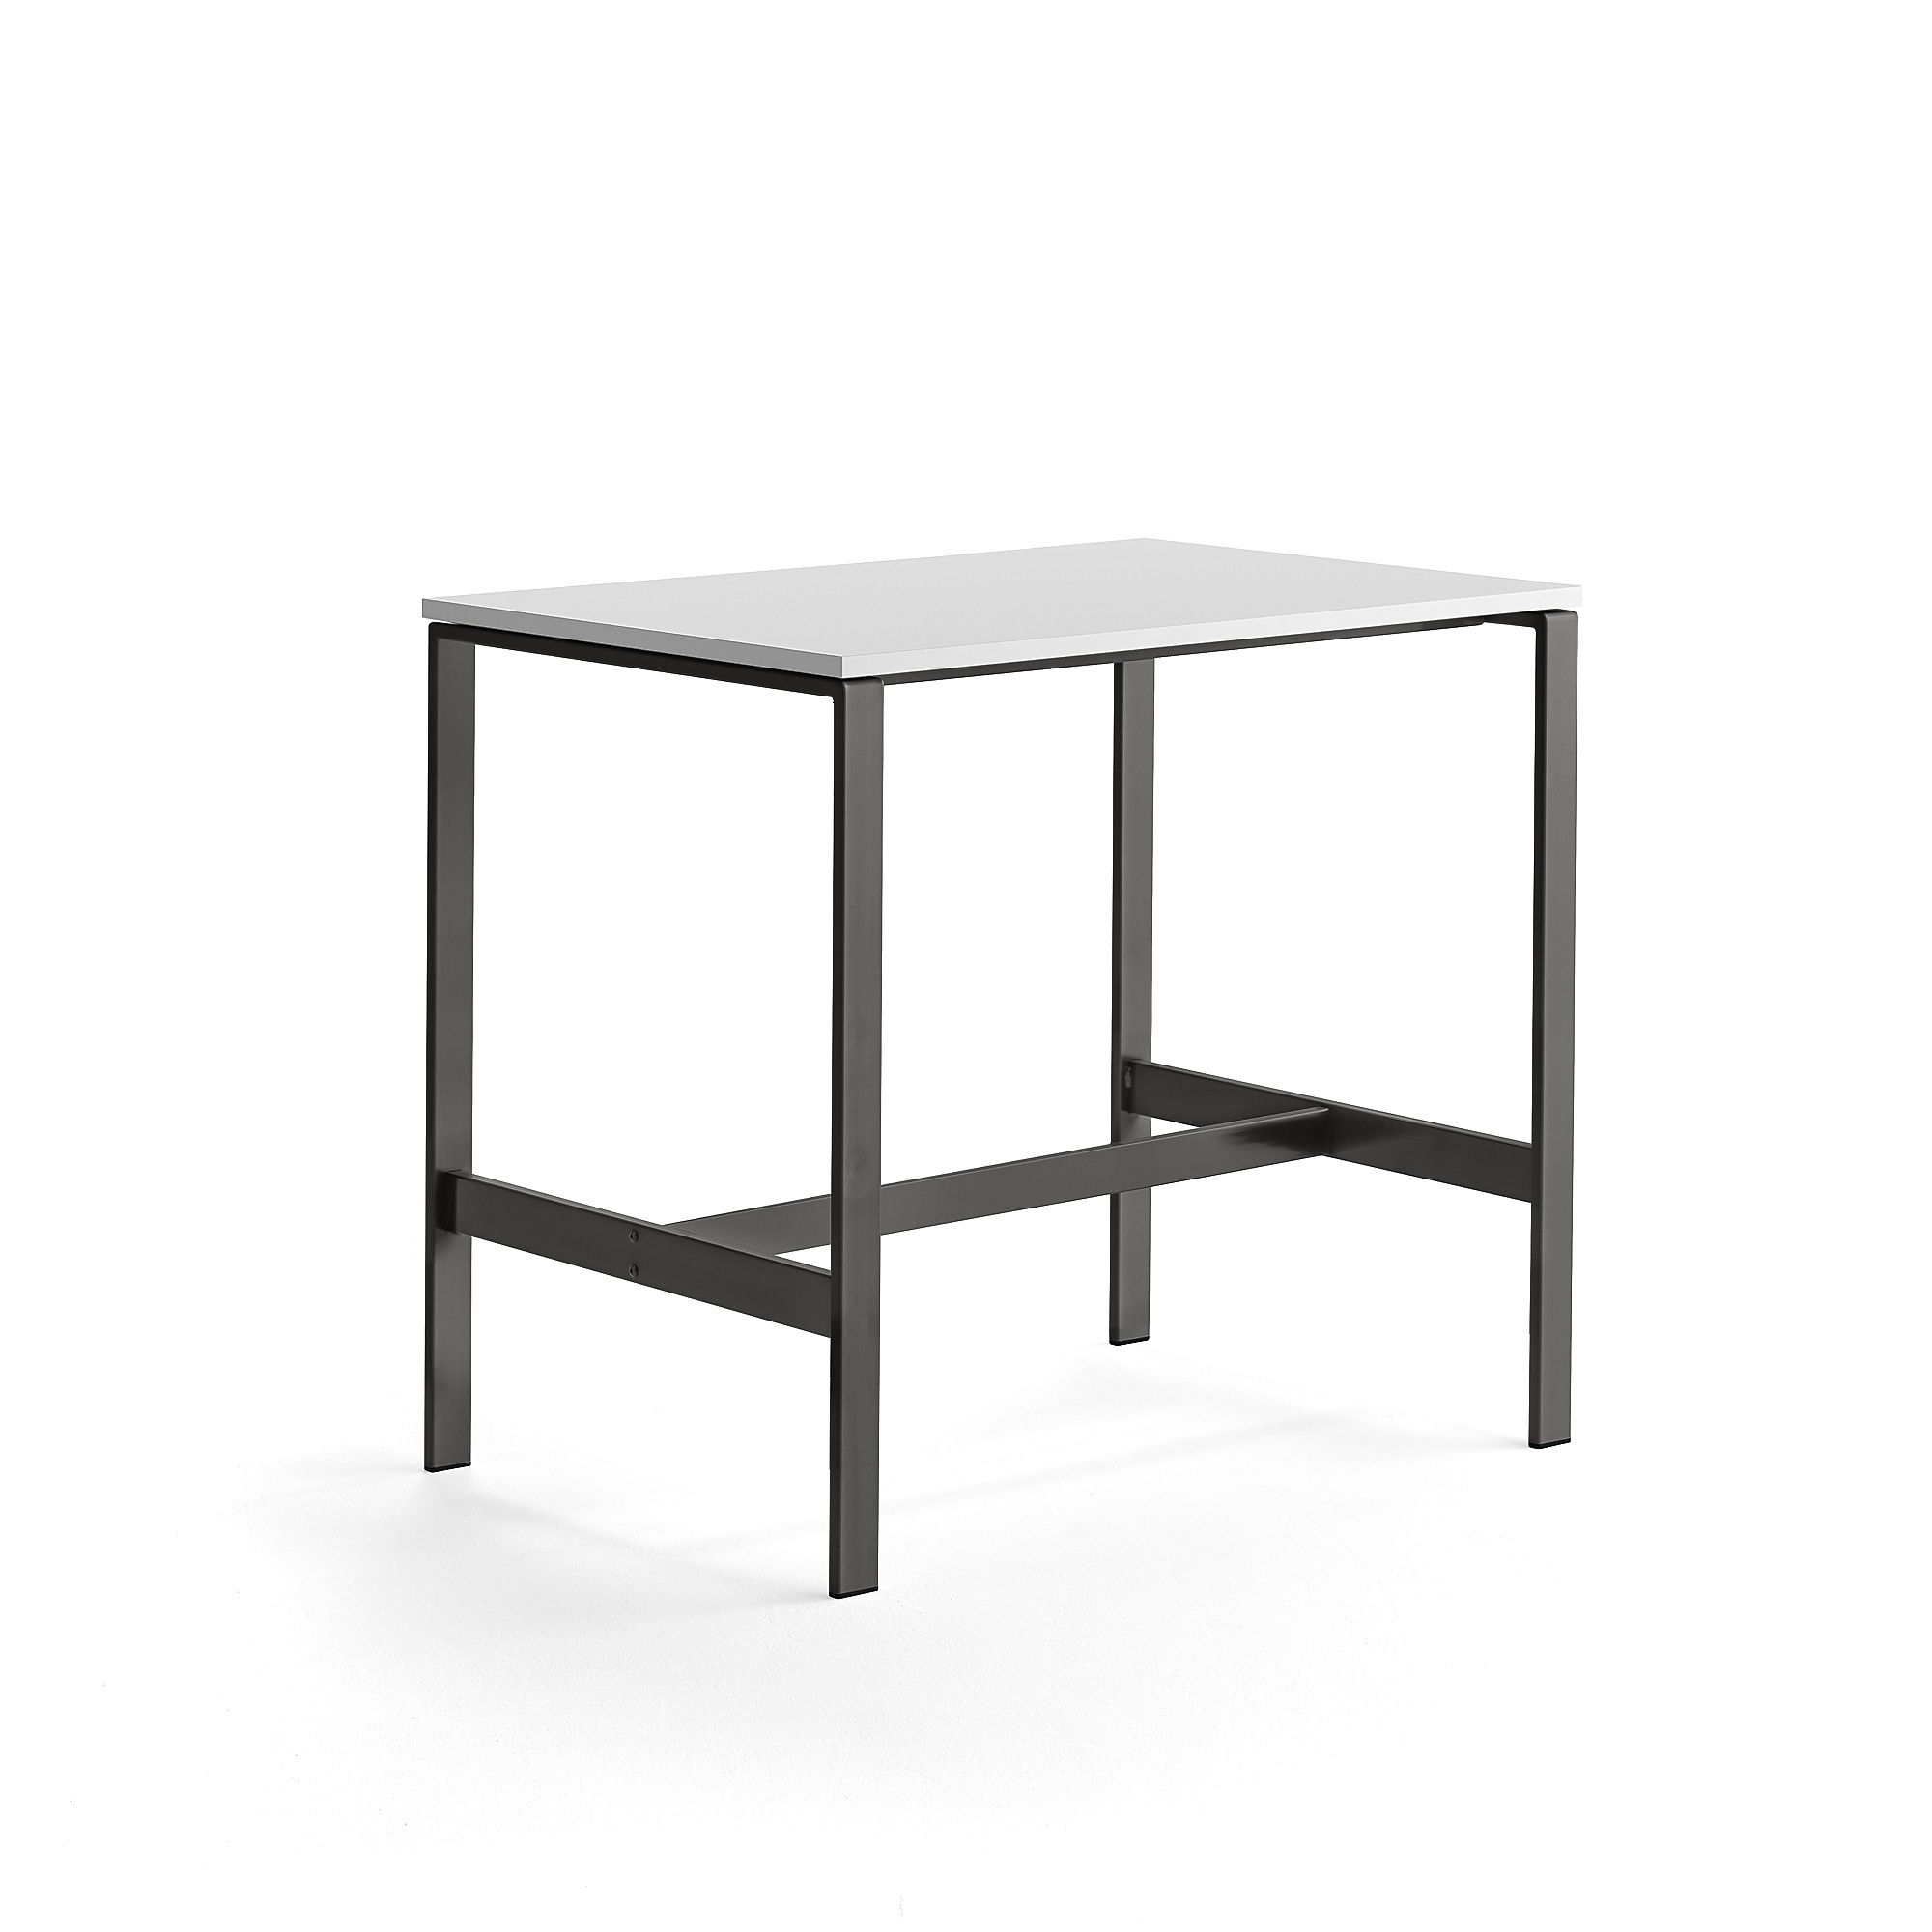 Stůl VARIOUS, 1200x800 mm, výška 1050 mm, černé nohy, bílá